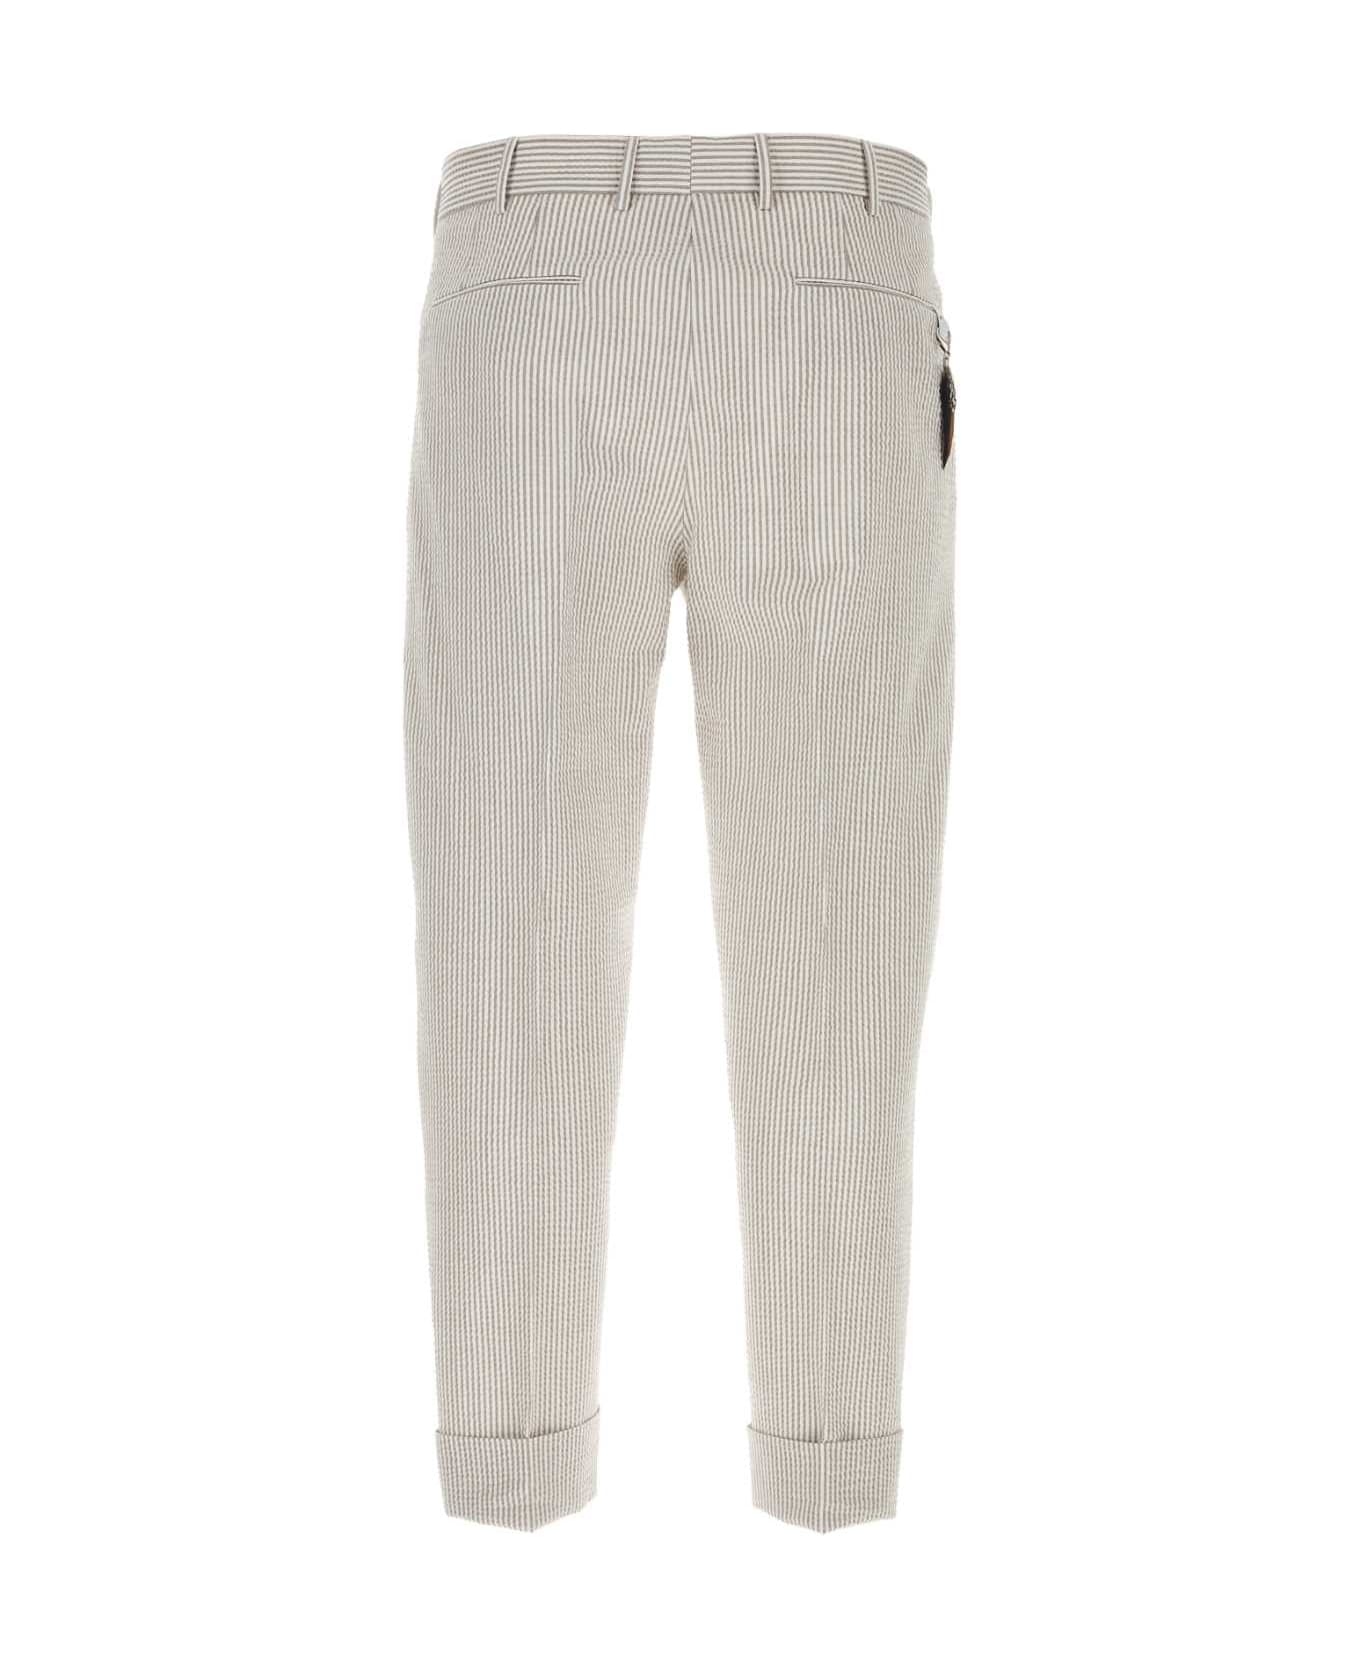 PT Torino Embroidered Stretch Cotton Pant - MARRONEBIANCO